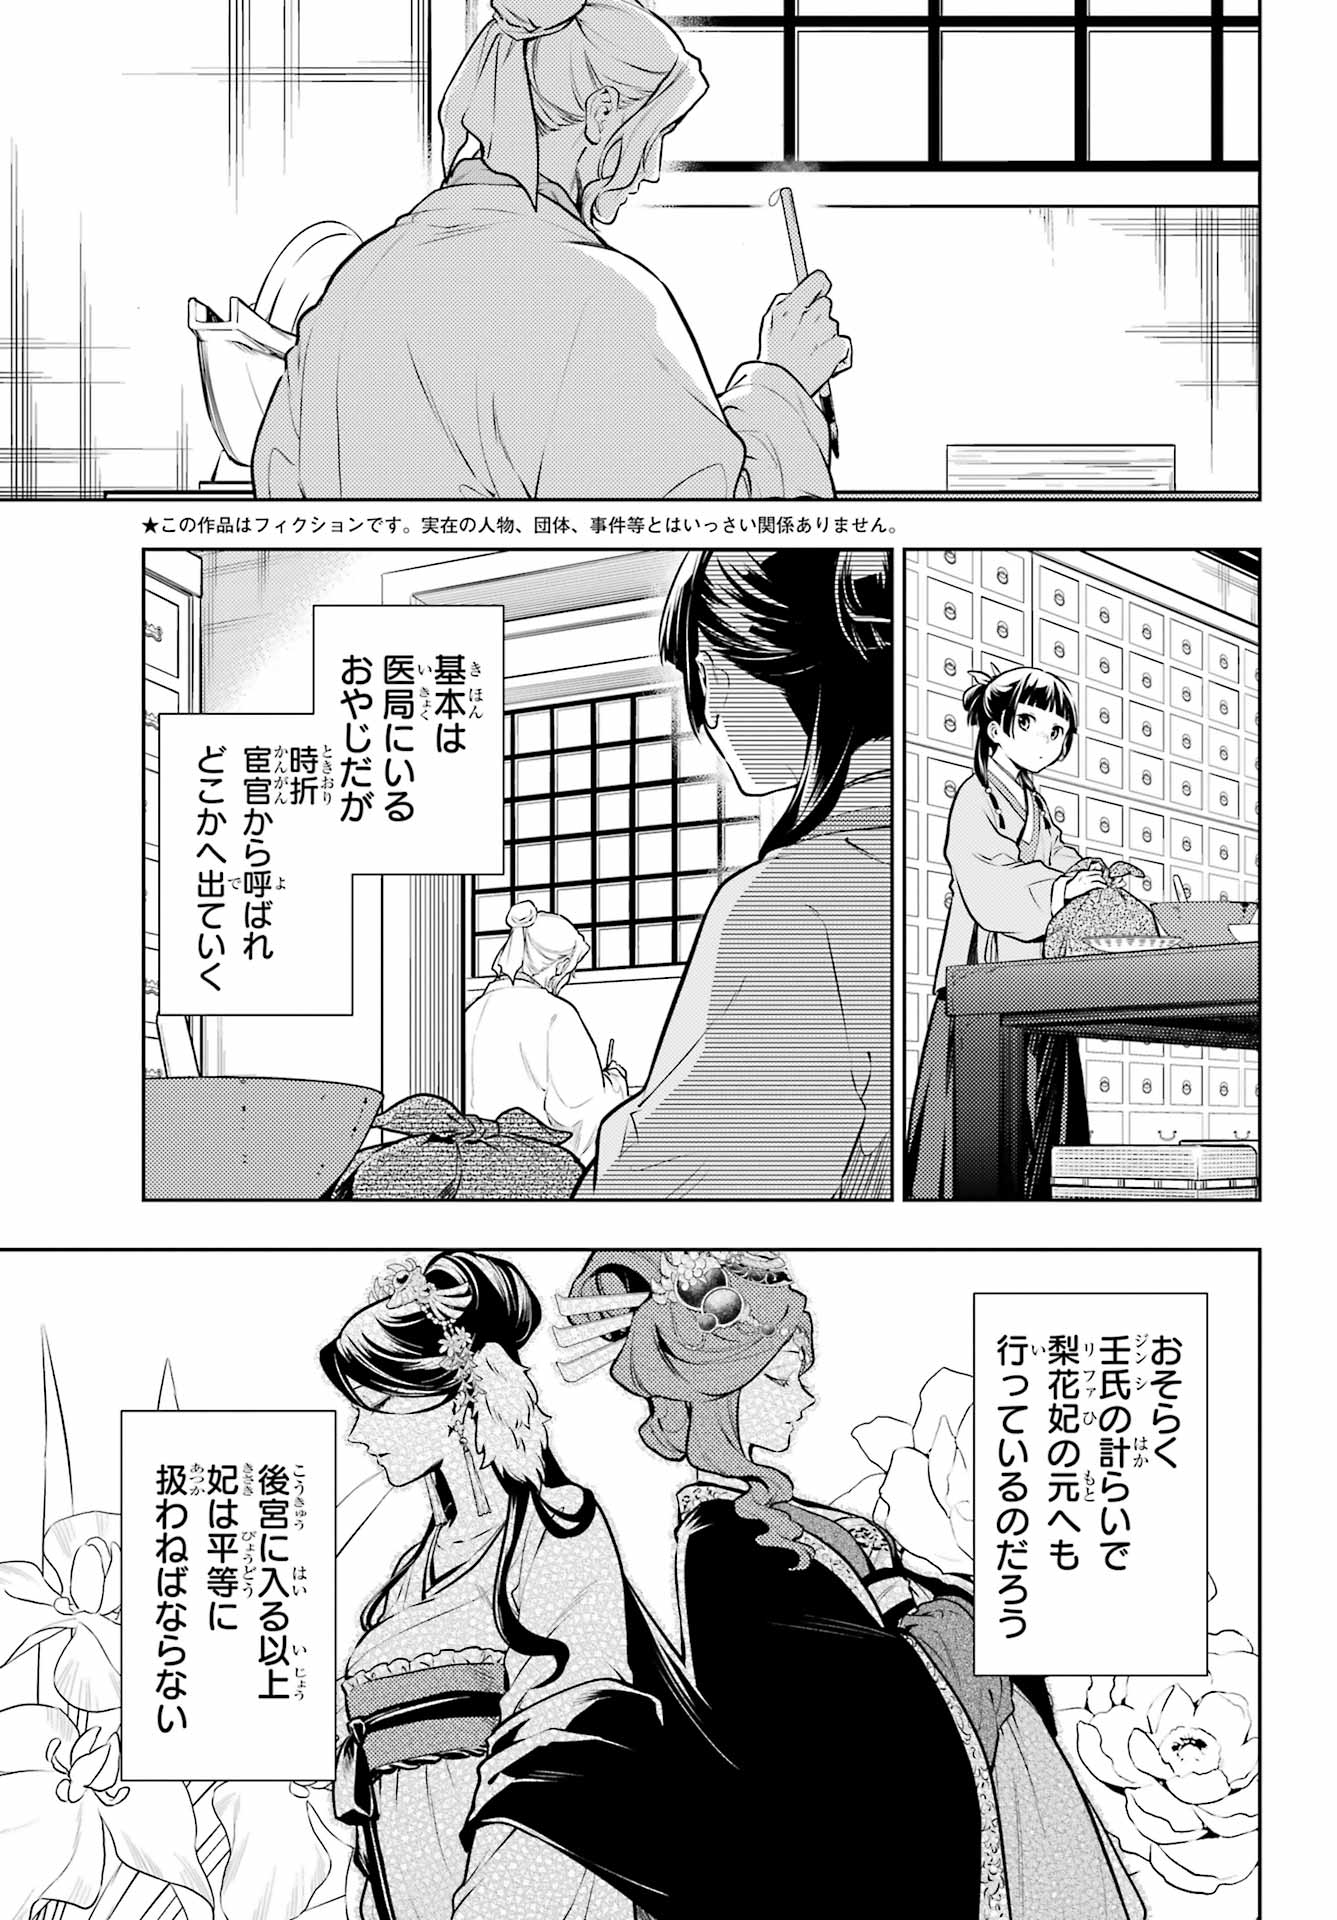 Kusuriya no Hitorigoto - Chapter 70 - Page 3